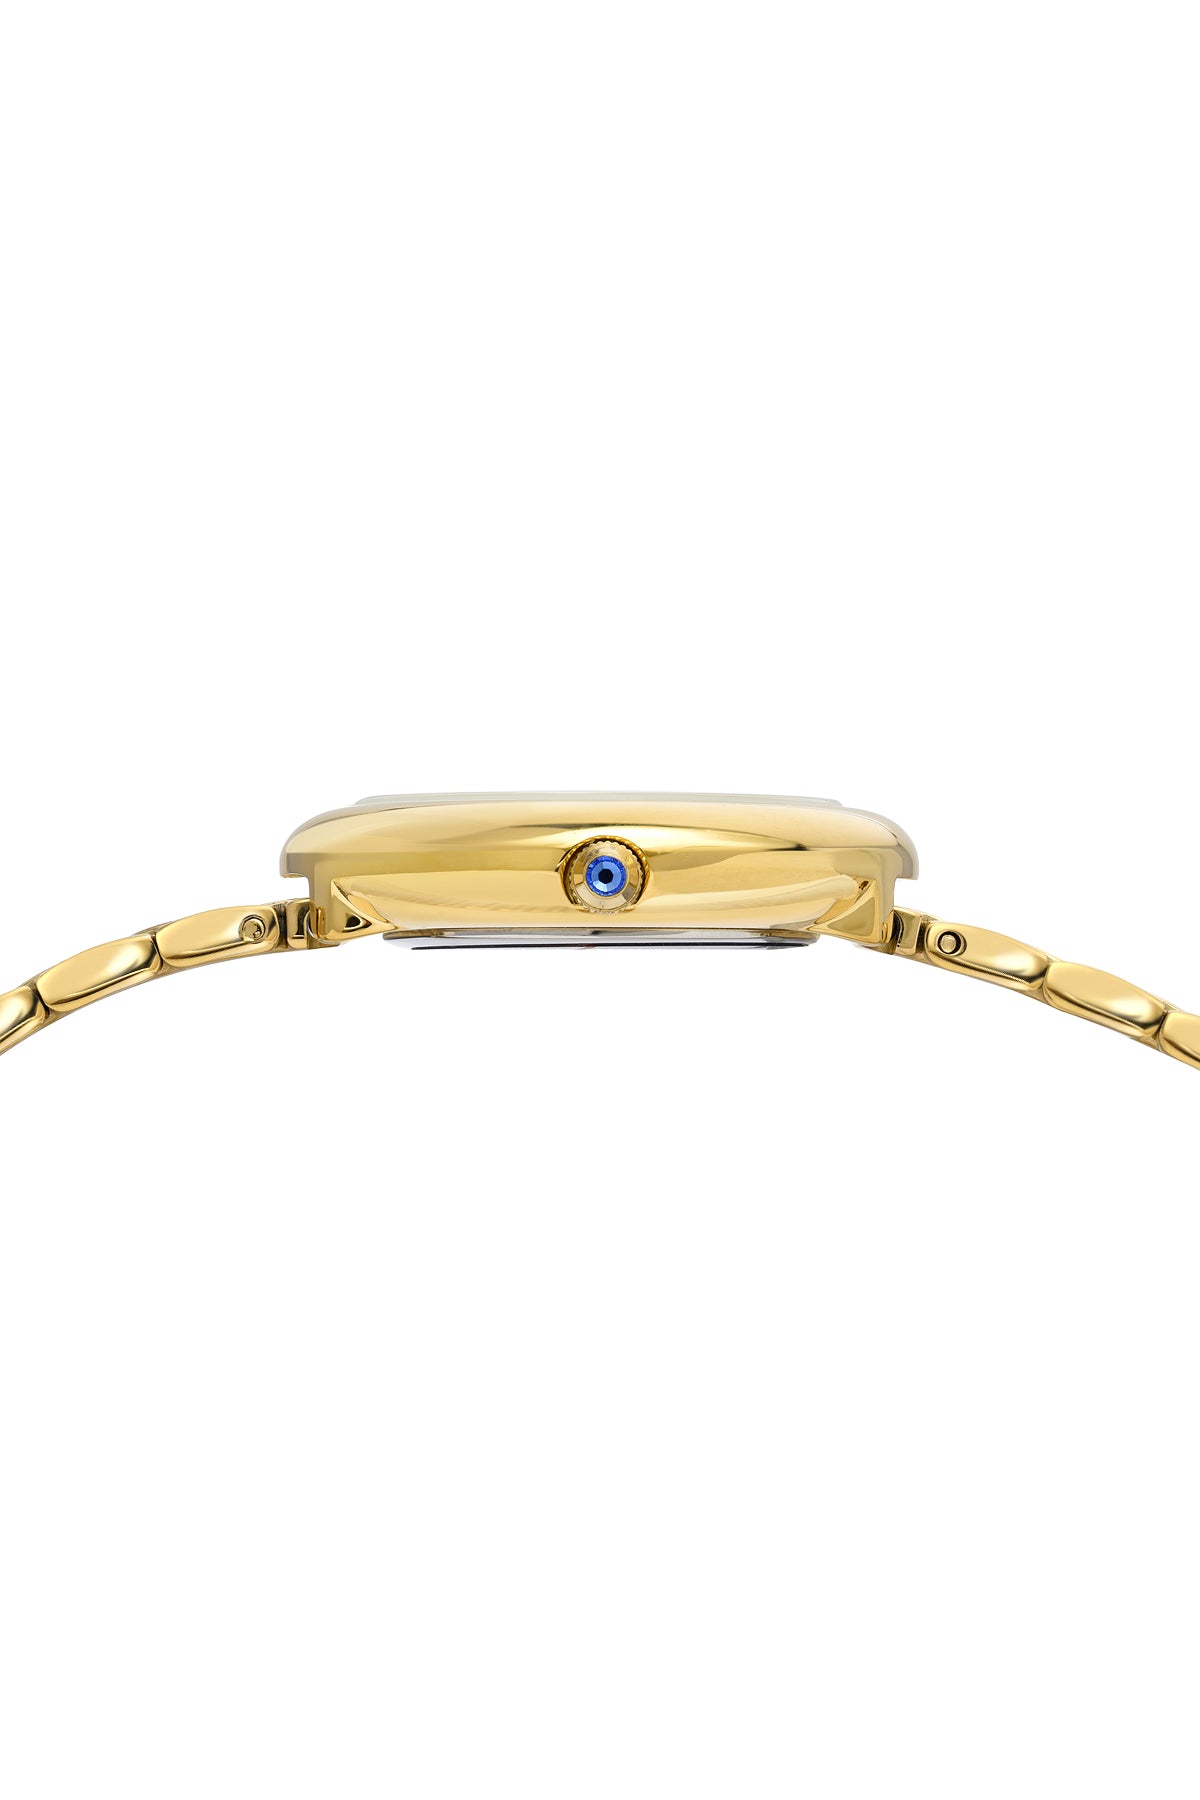 Porsamo Bleu Florentina Luxury Diamond Women's Stainless Steel Watch, Blue, Gold 902BFLS